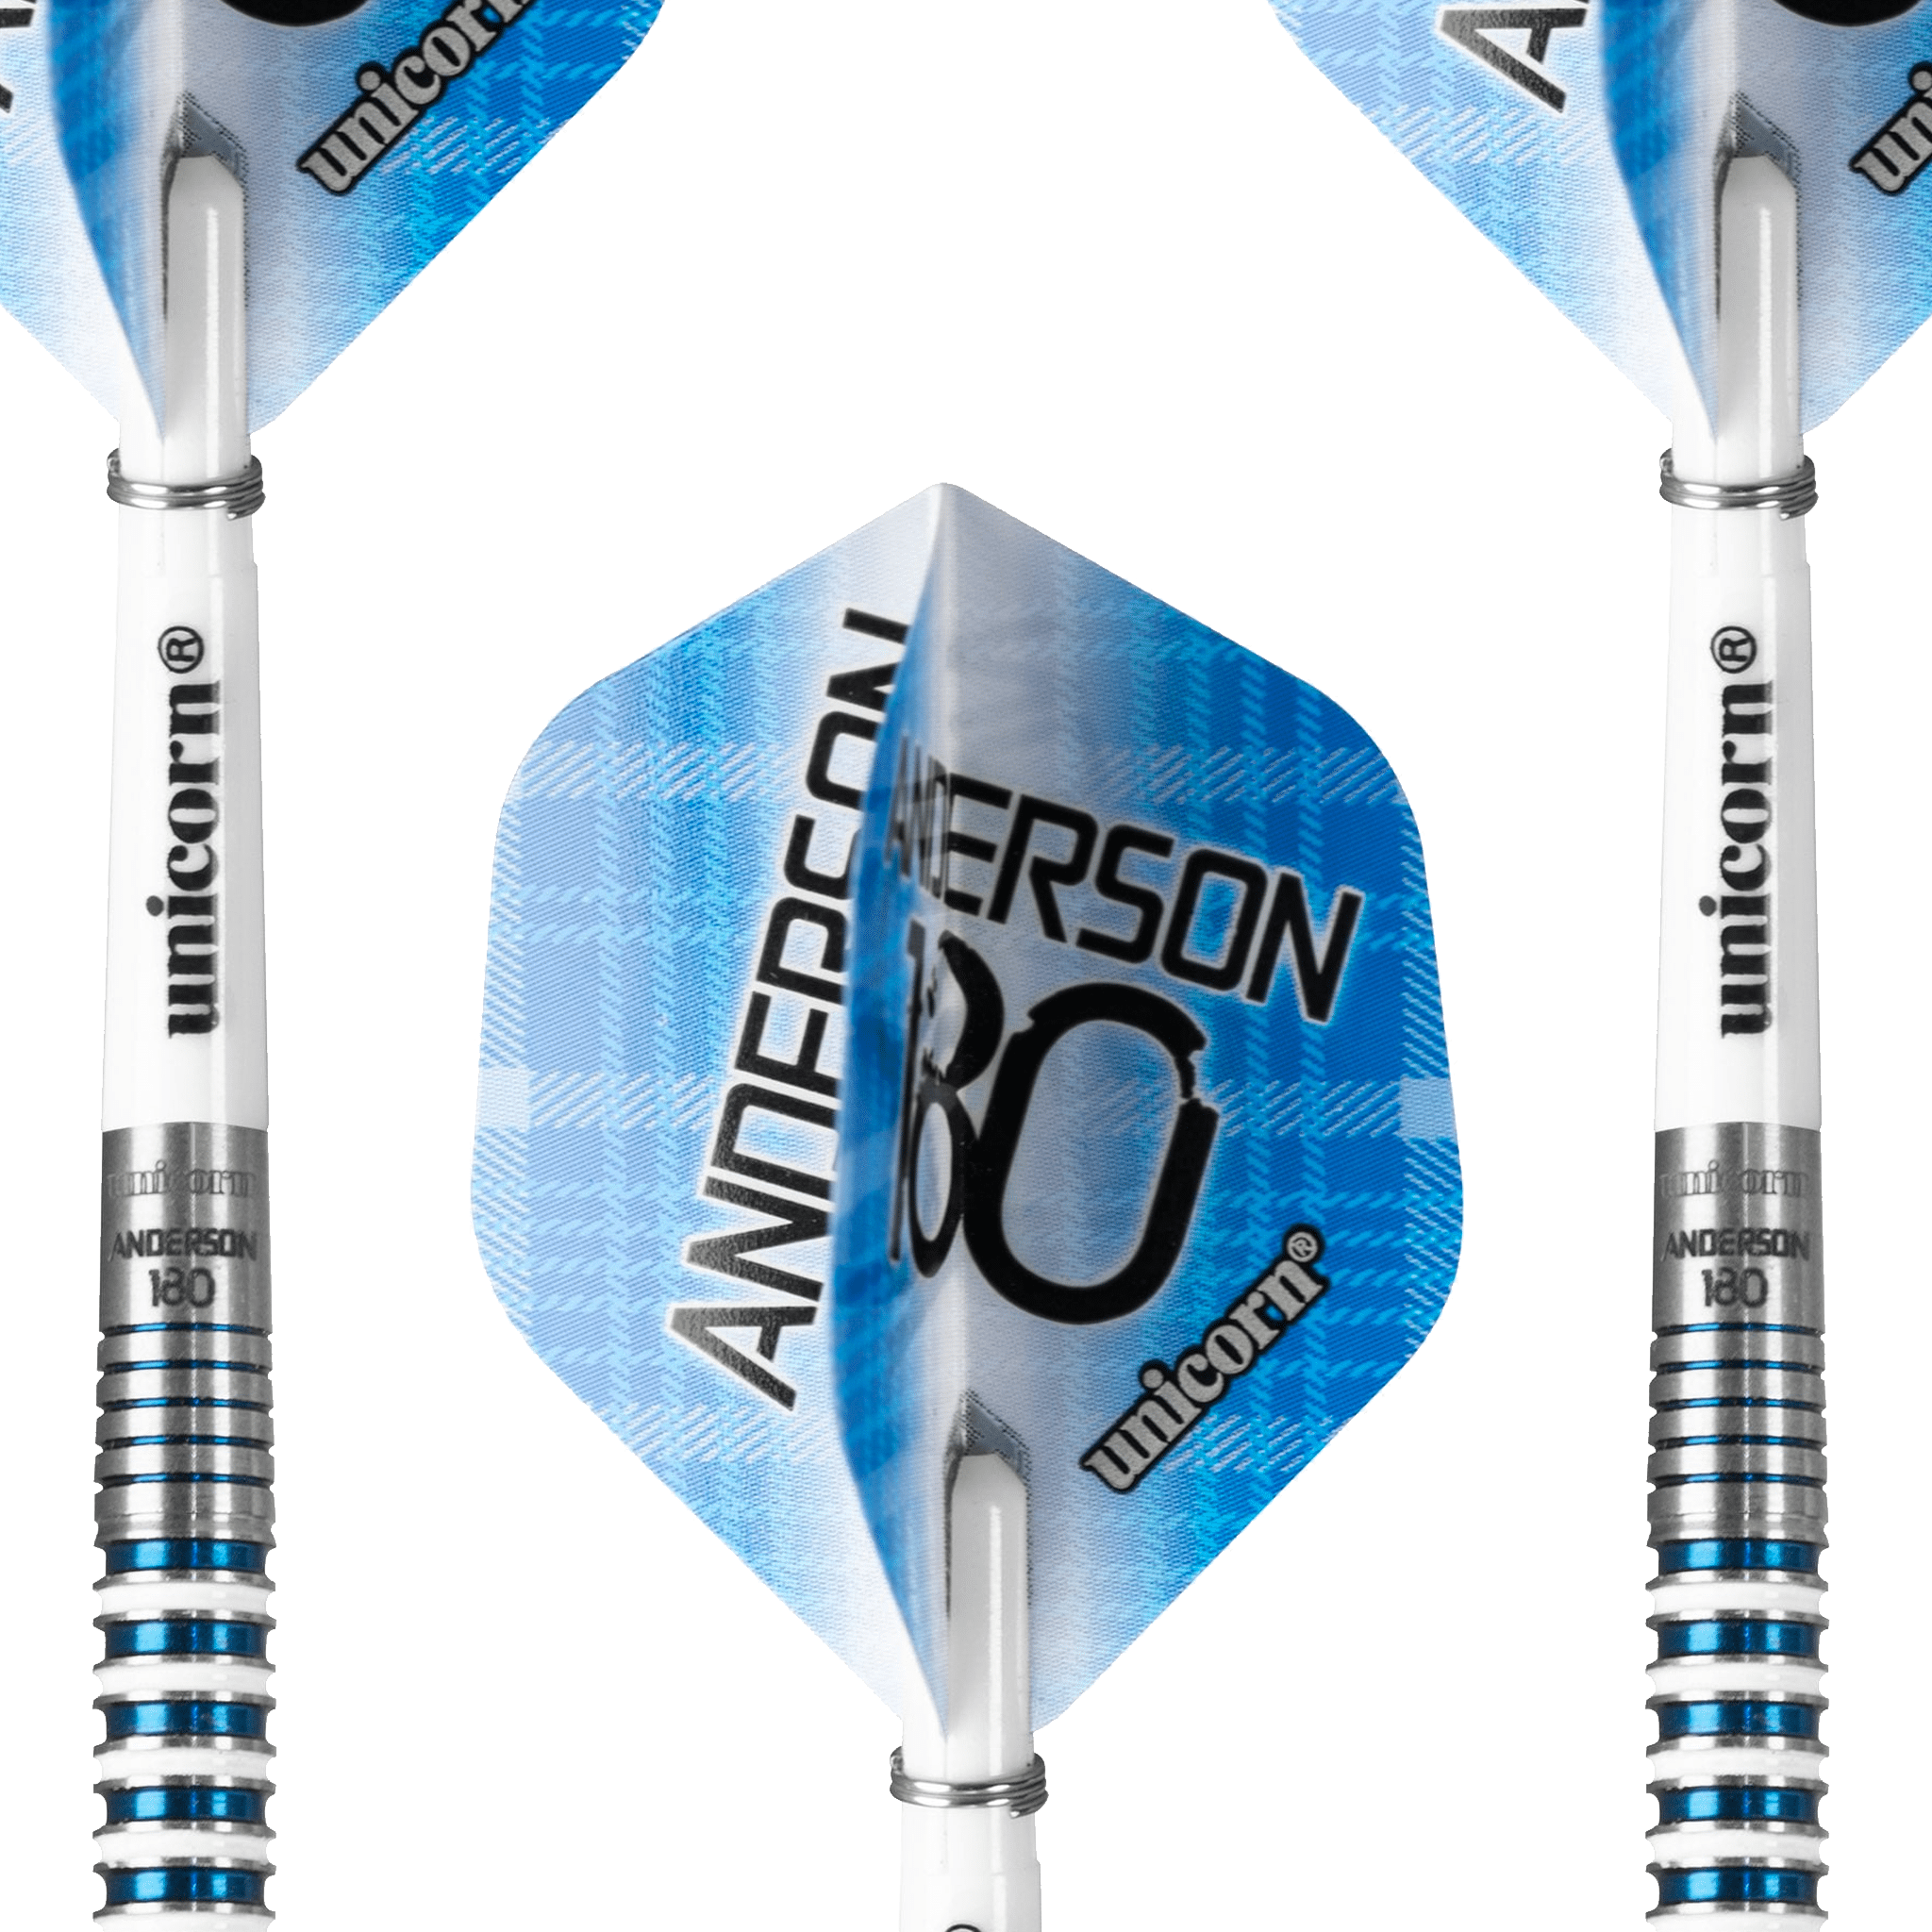 Unicorn Gary Anderson 180 Steel Tip Darts - 90% Tungsten - 23 Grams Darts